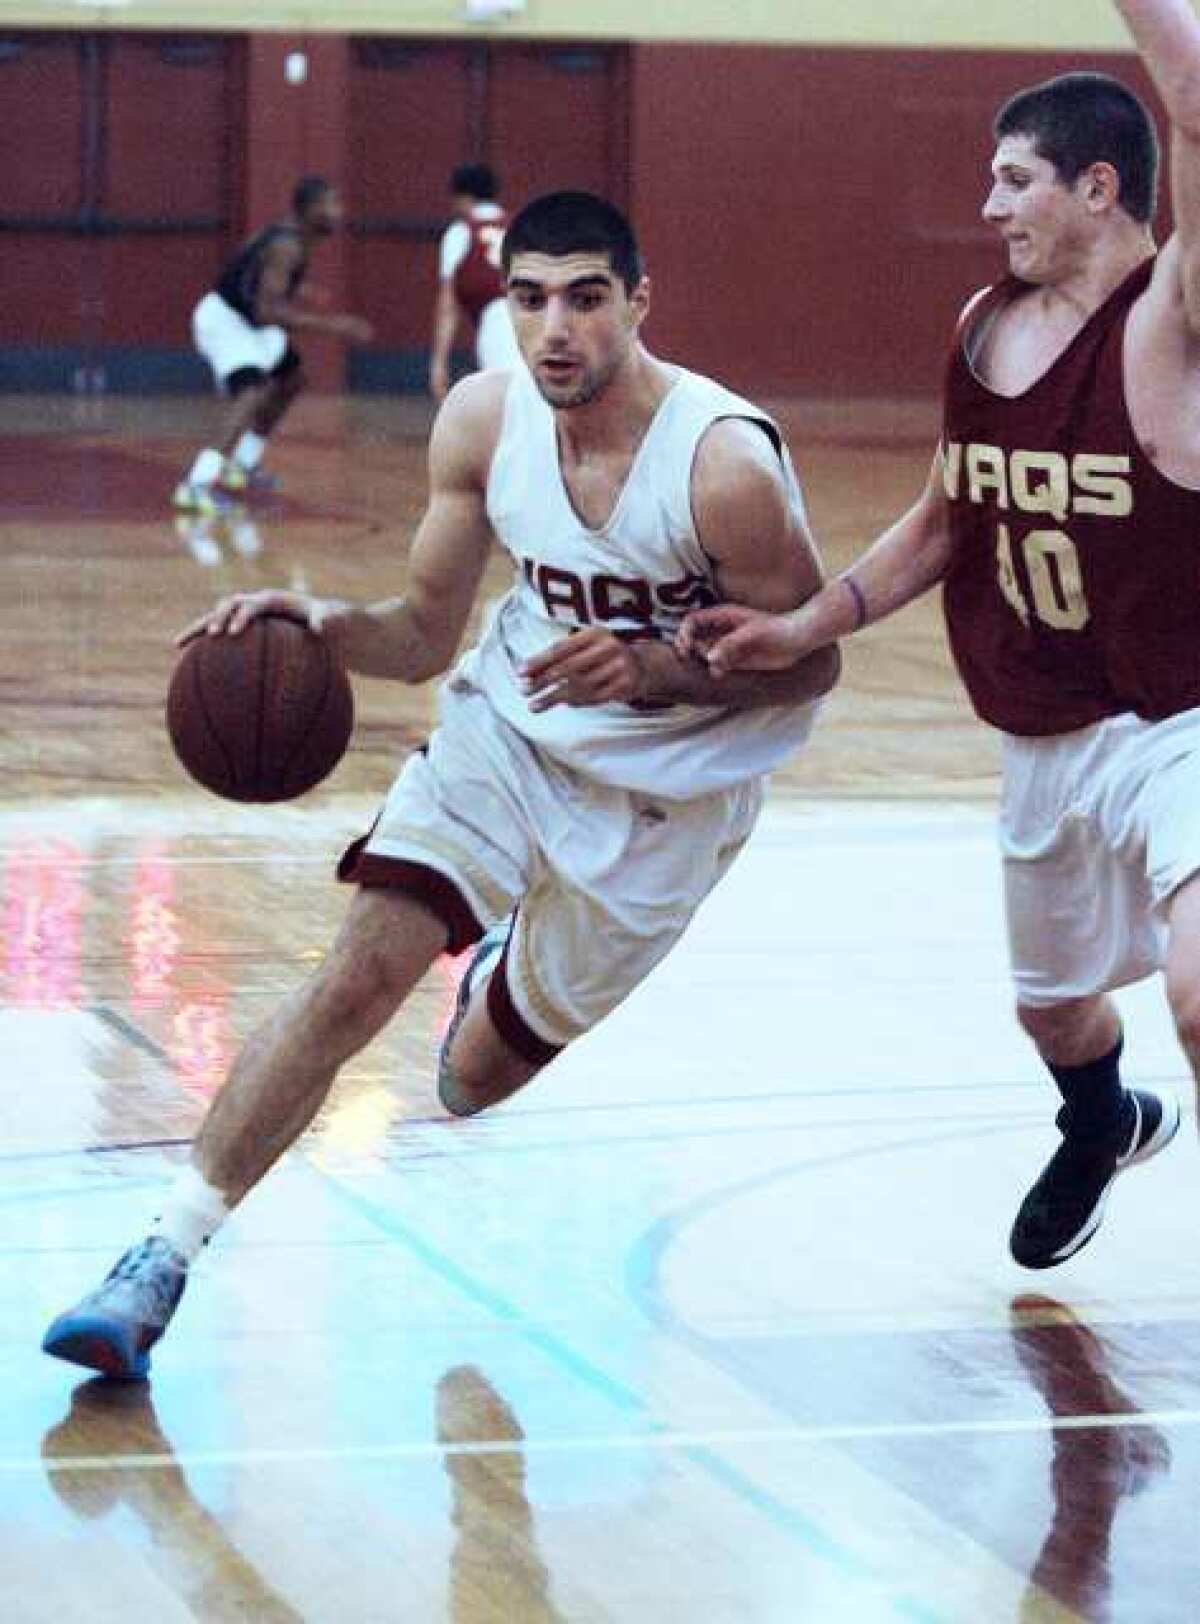 Gor Plavchyan drives against Nick Khan at Glendale Community College men's basketball practice.